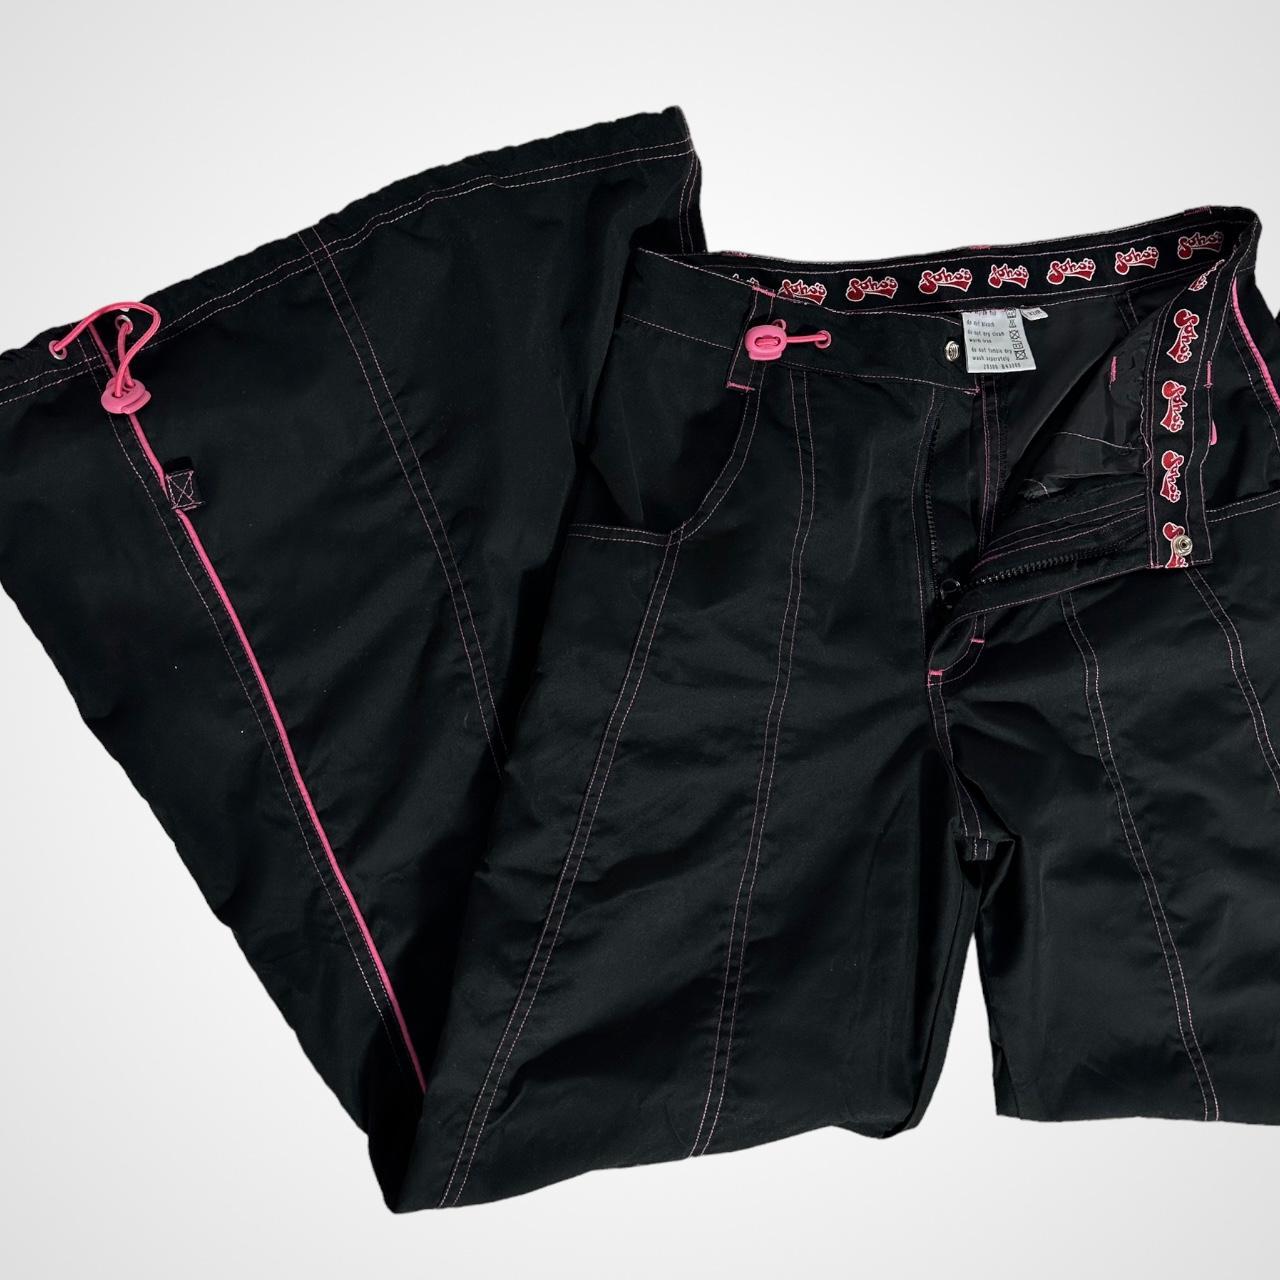 Soho’s vintage 90s raver black and pink wide leg parachute pants